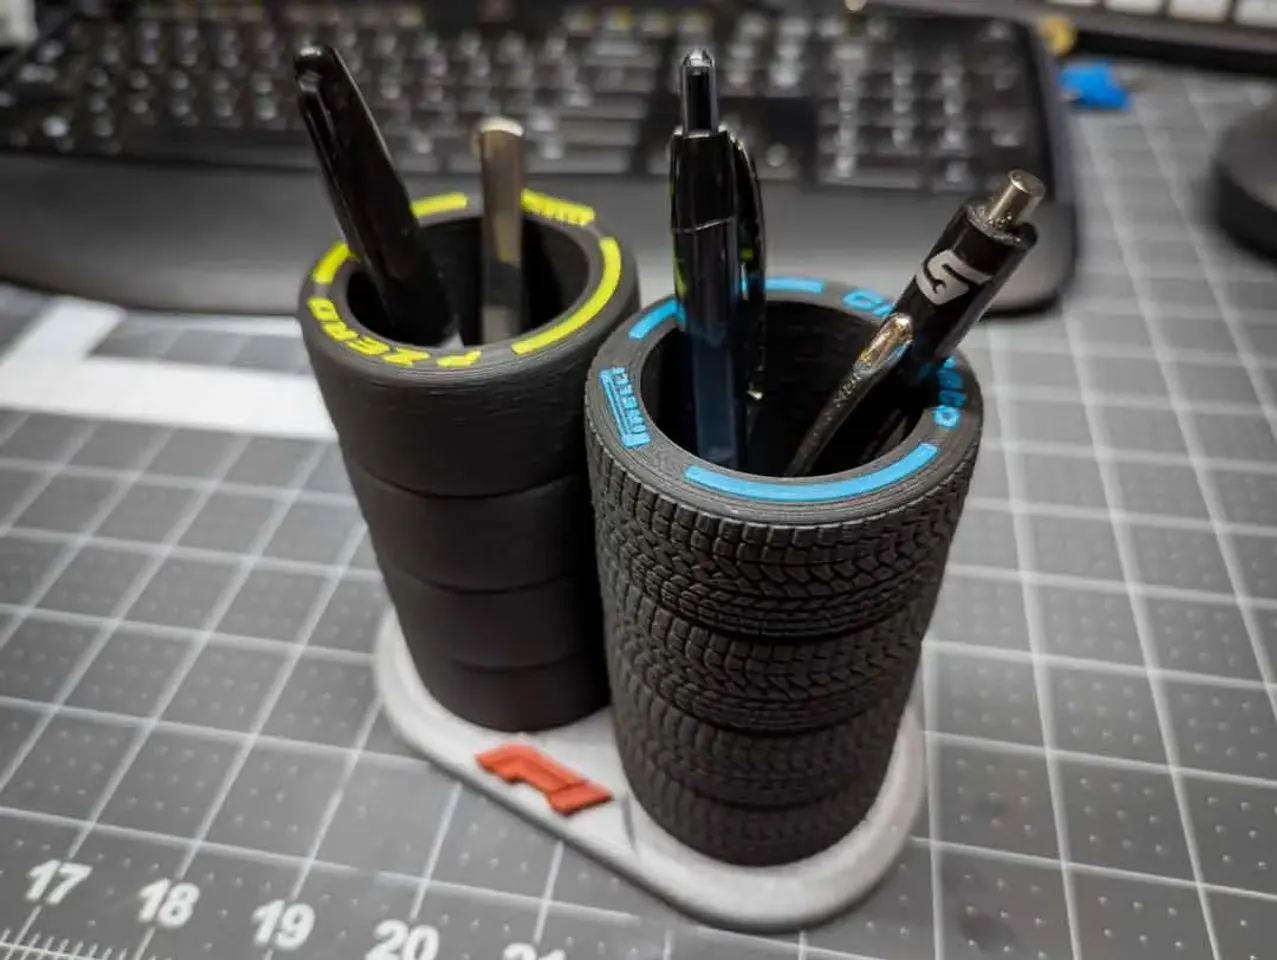 F1 Tires - Pencil/Pen Holder by AstroStock